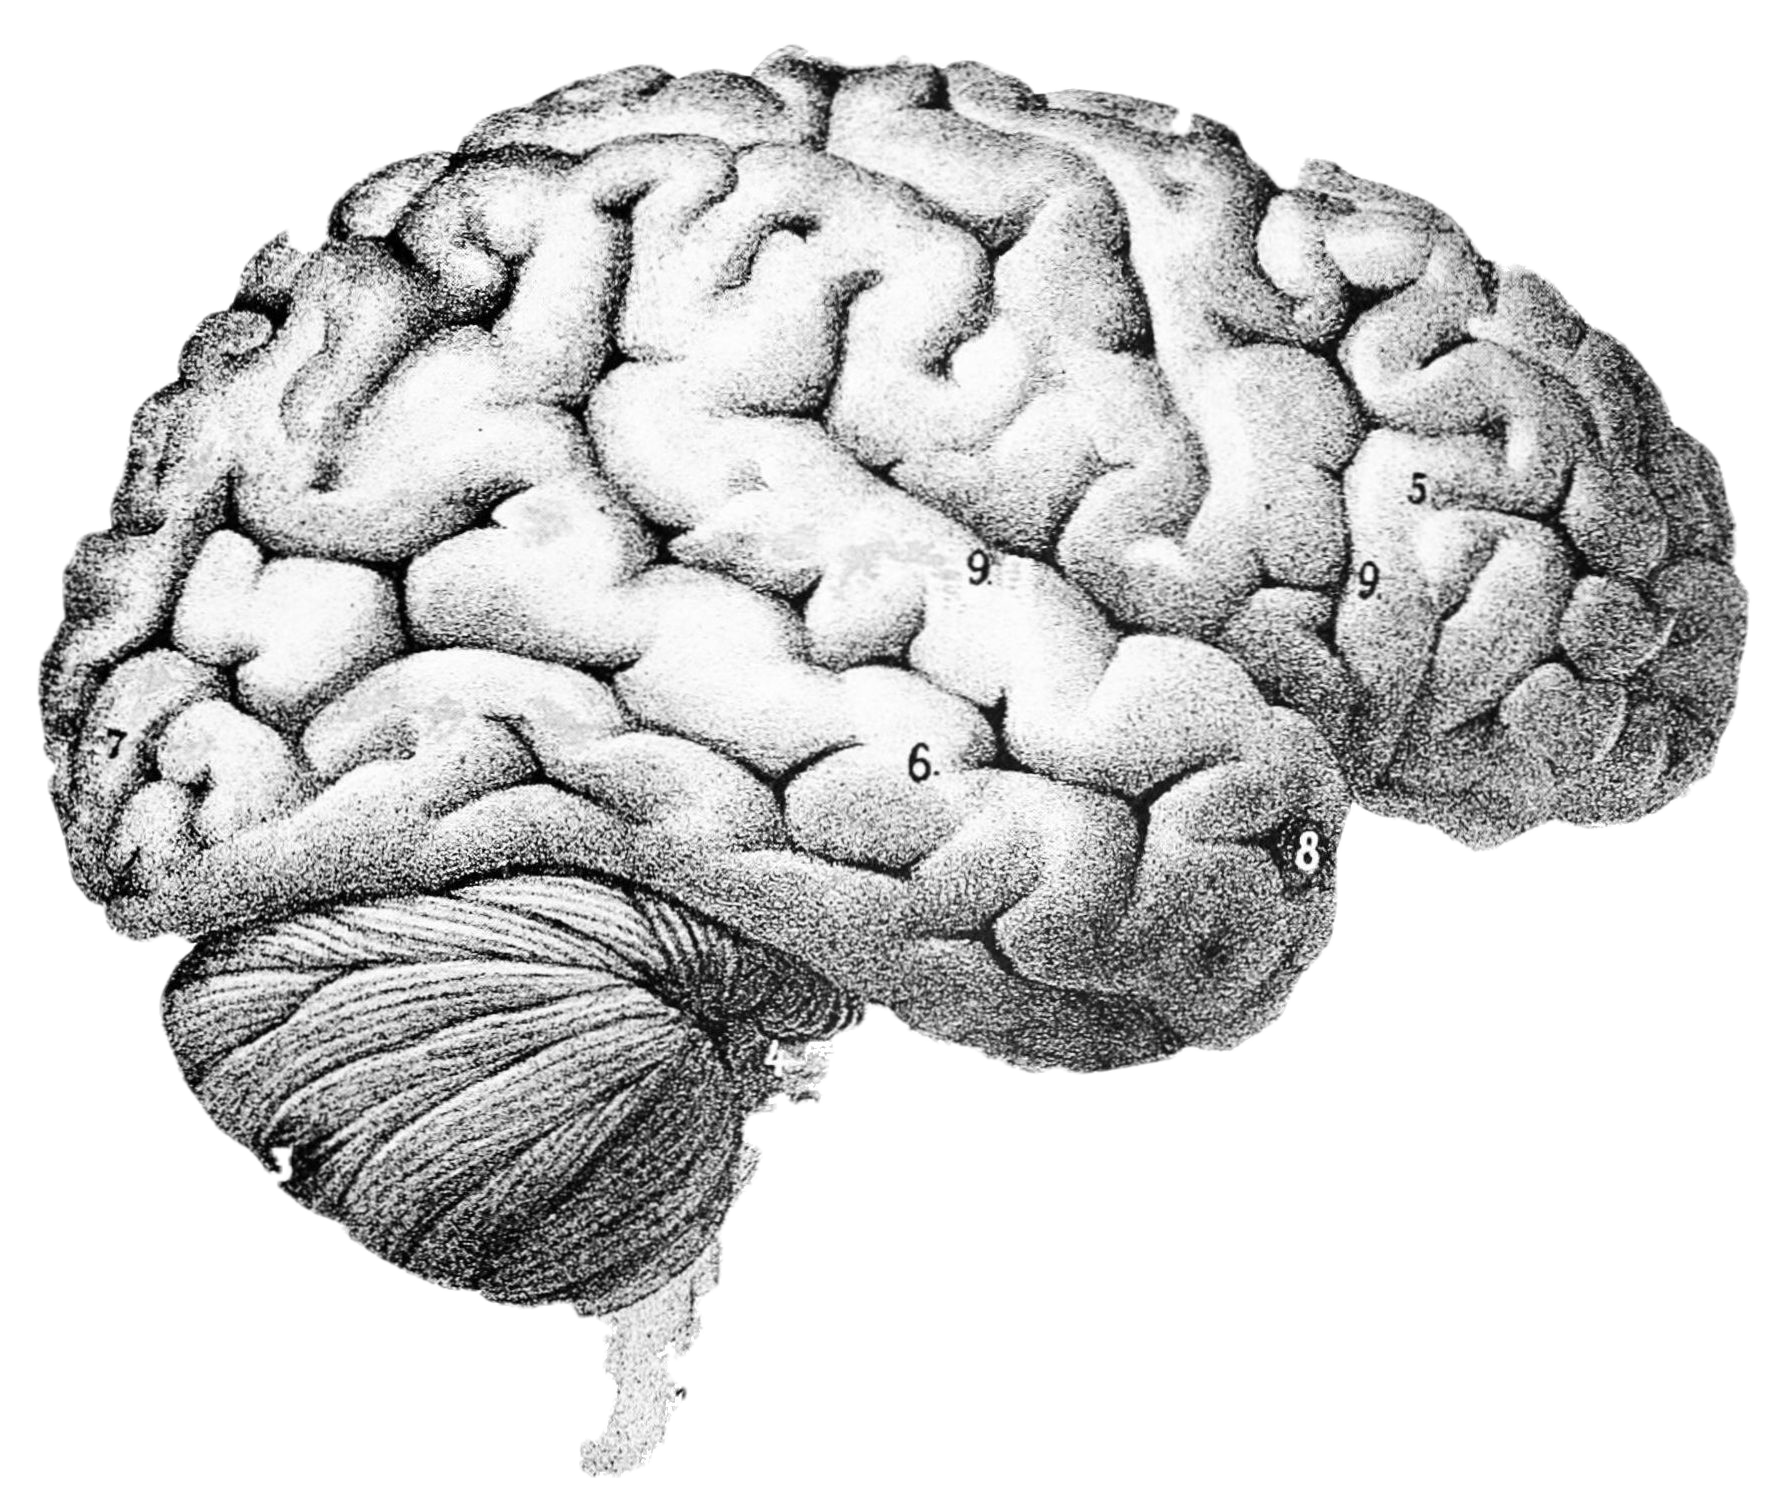 The Regional Brain